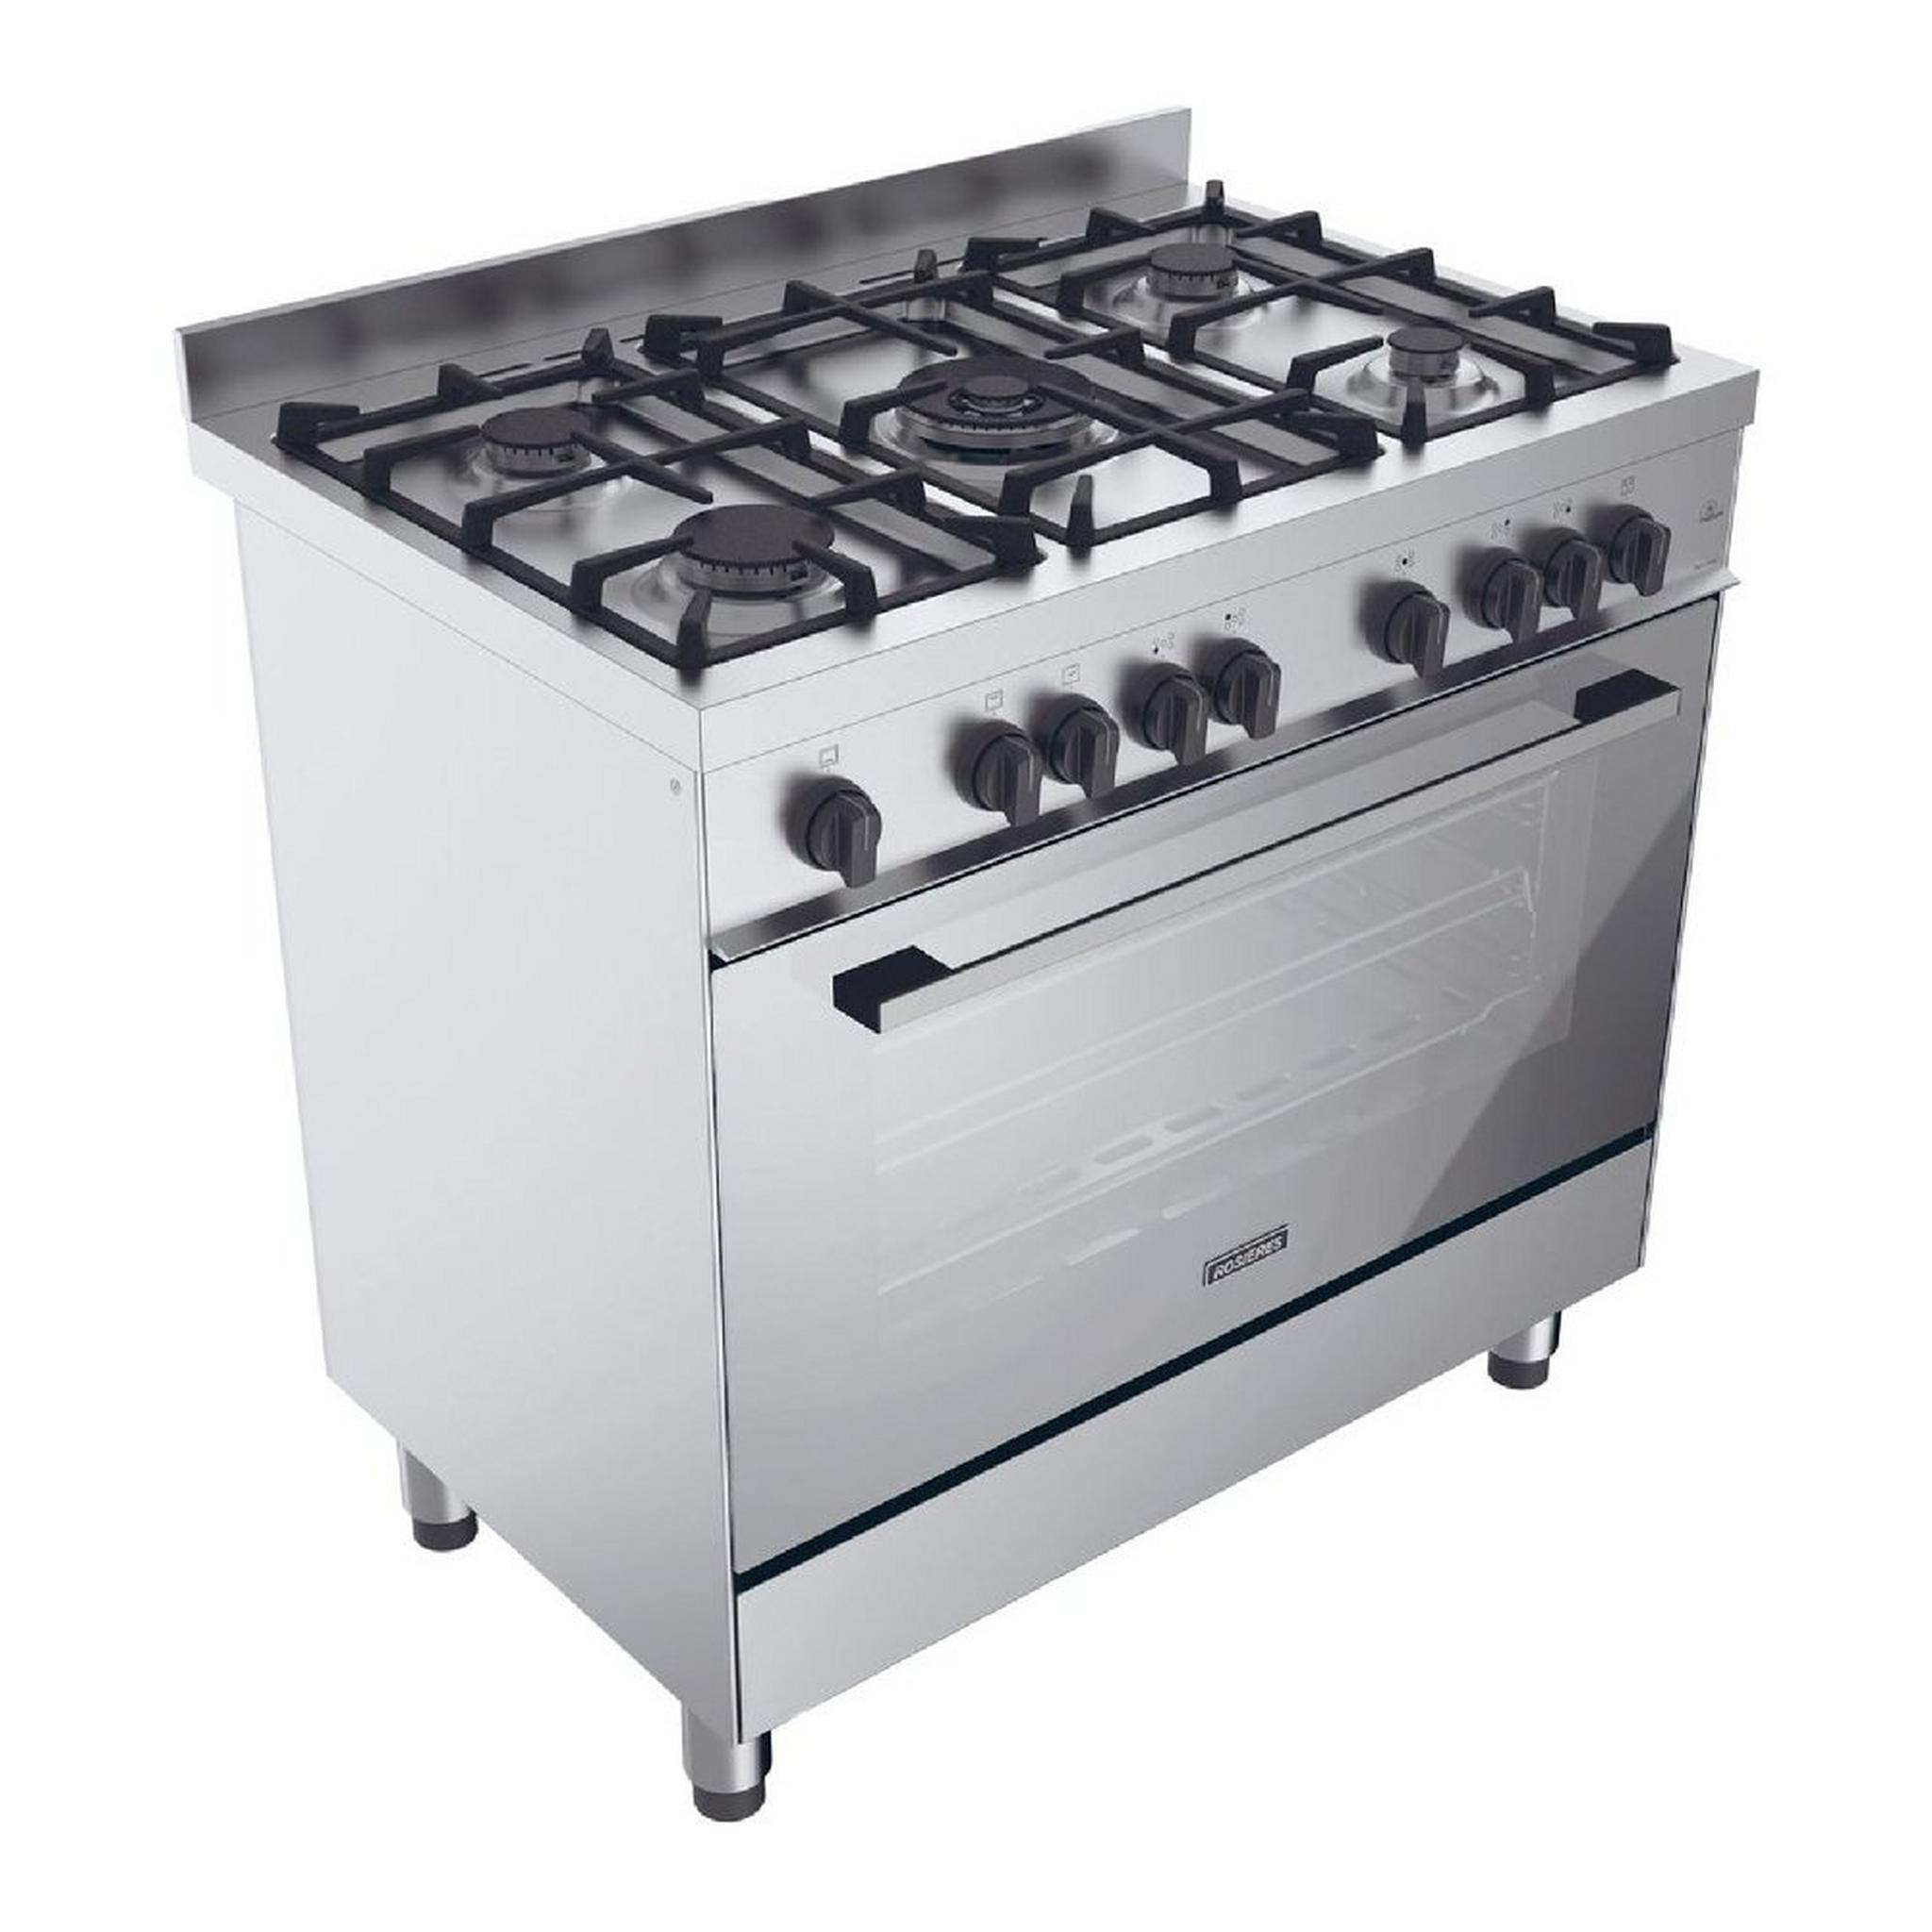 ROSIERES 5 Burners Cooker Gas Range, 90X60cm, RGG95HXLPG/1 – Inox